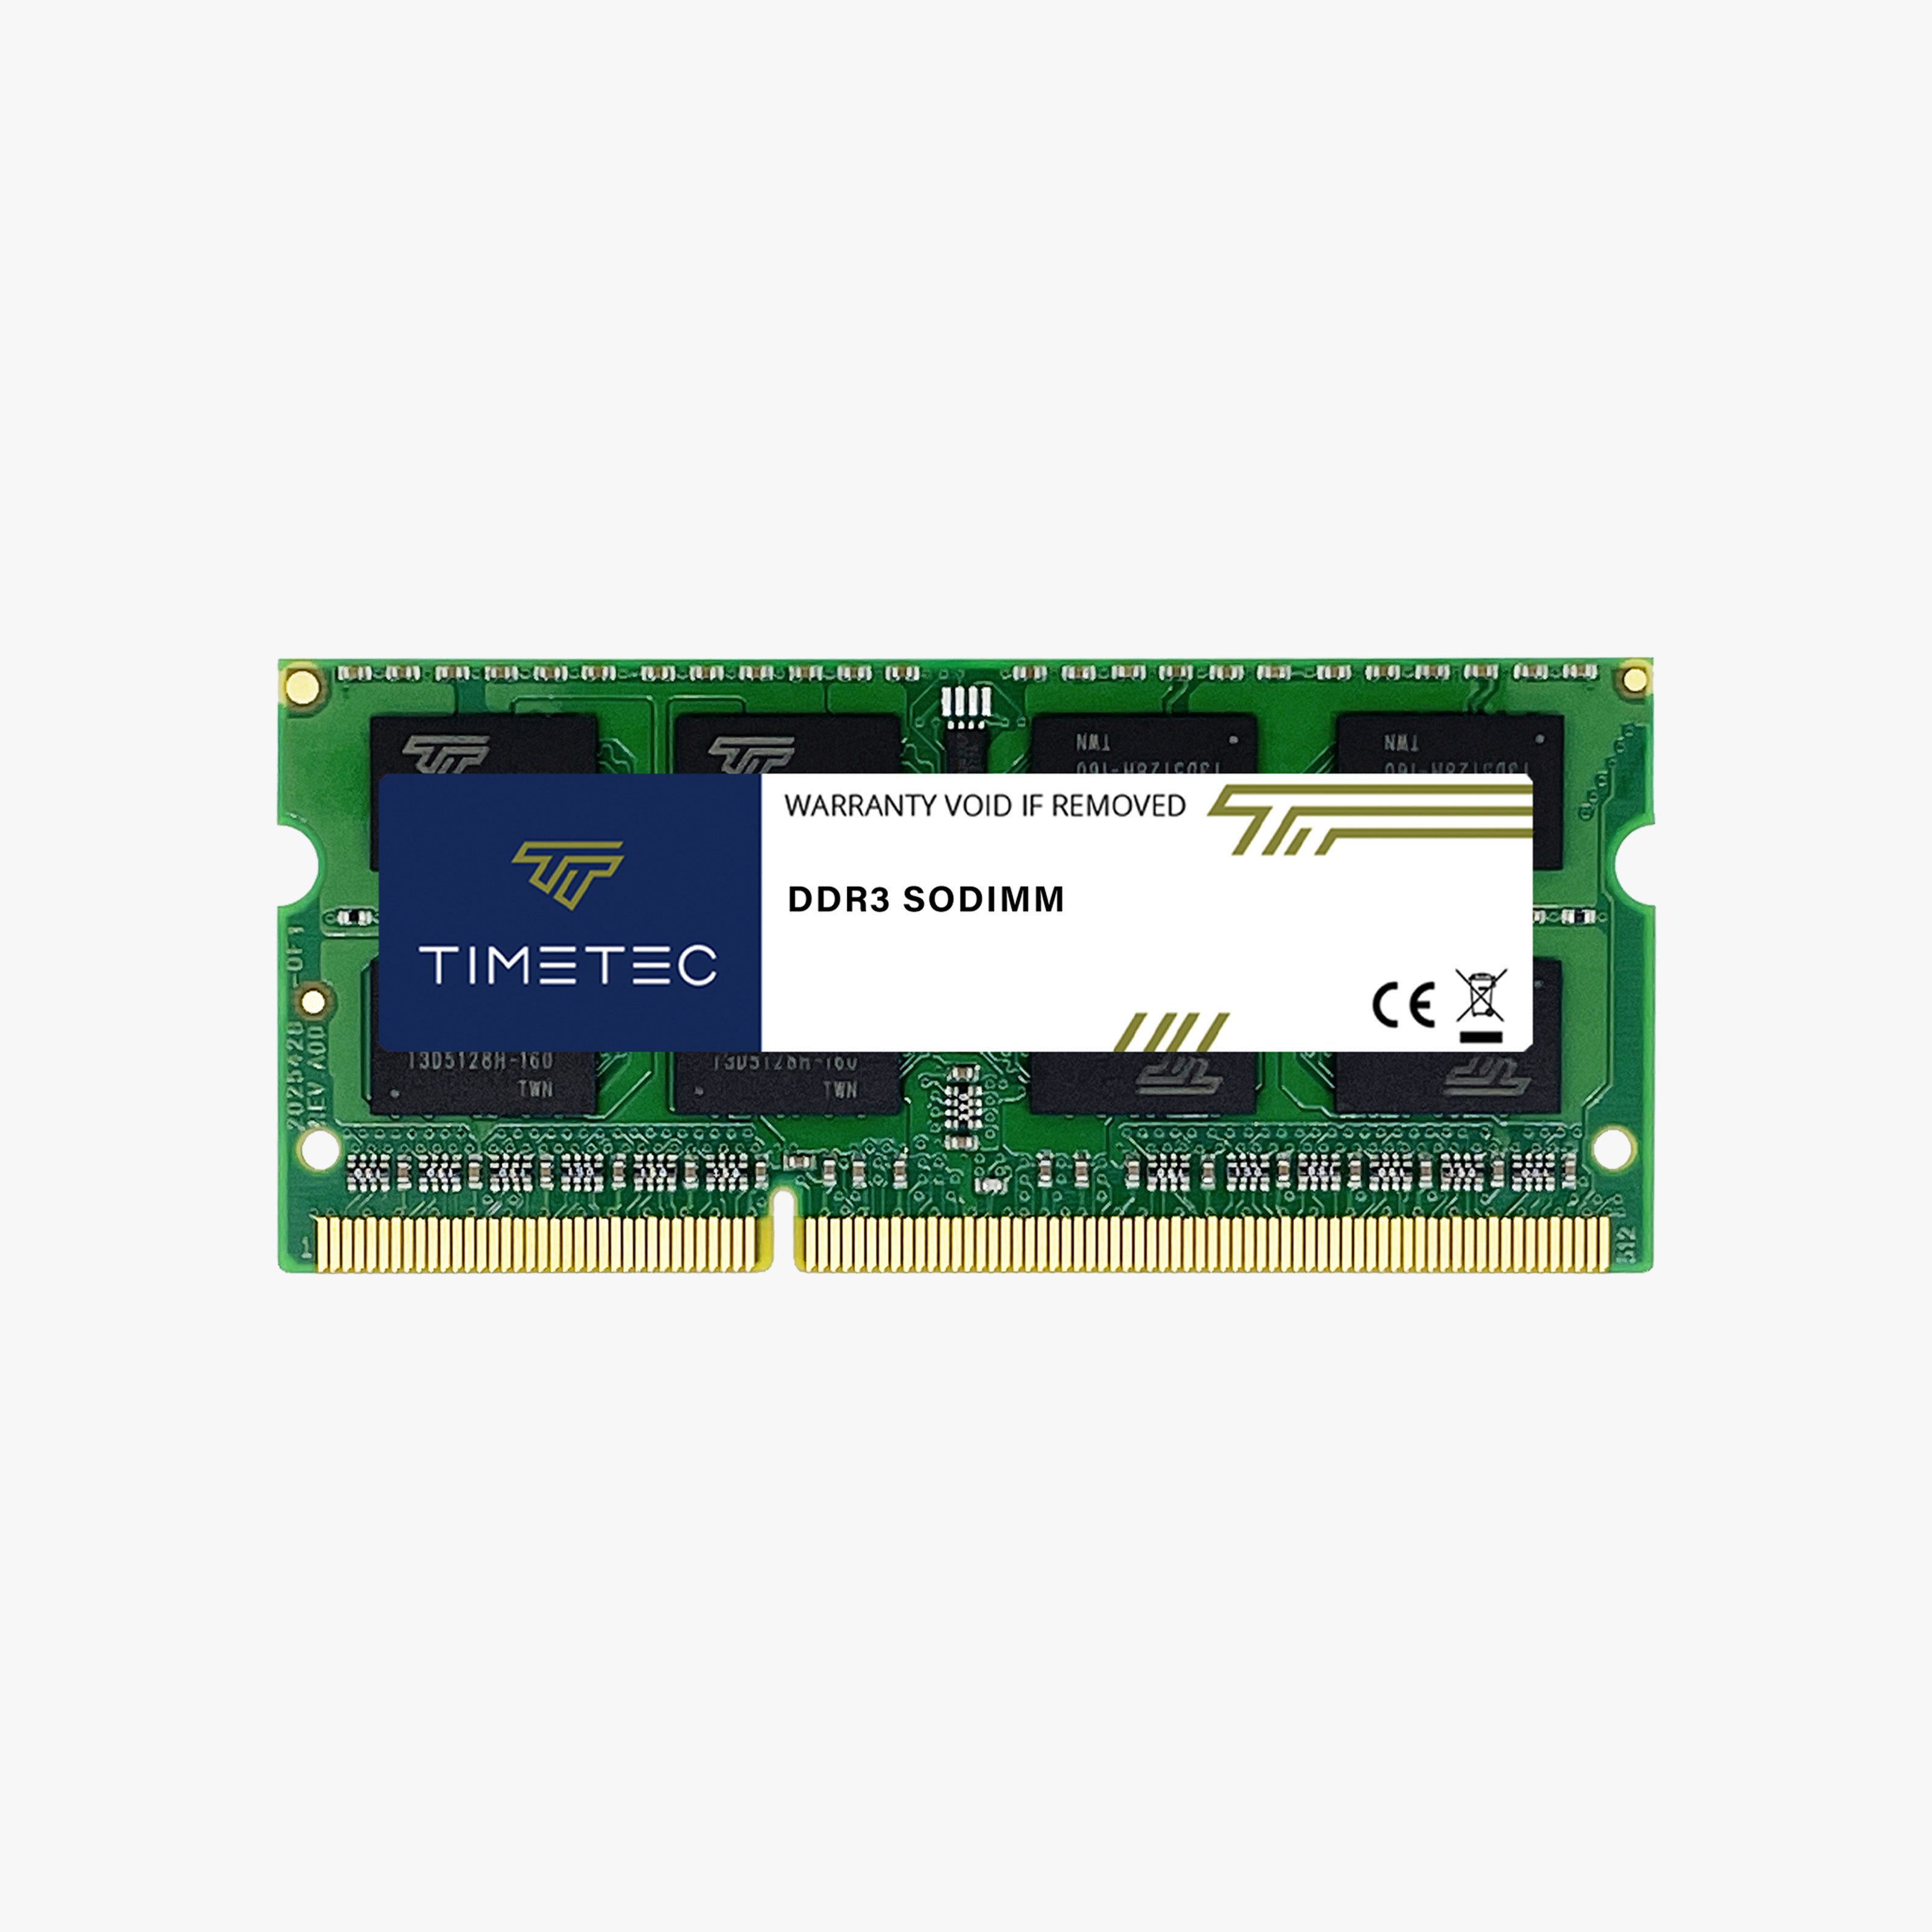 TIMETEC PREMIUM DDR3 SODIMM Laptop Memory